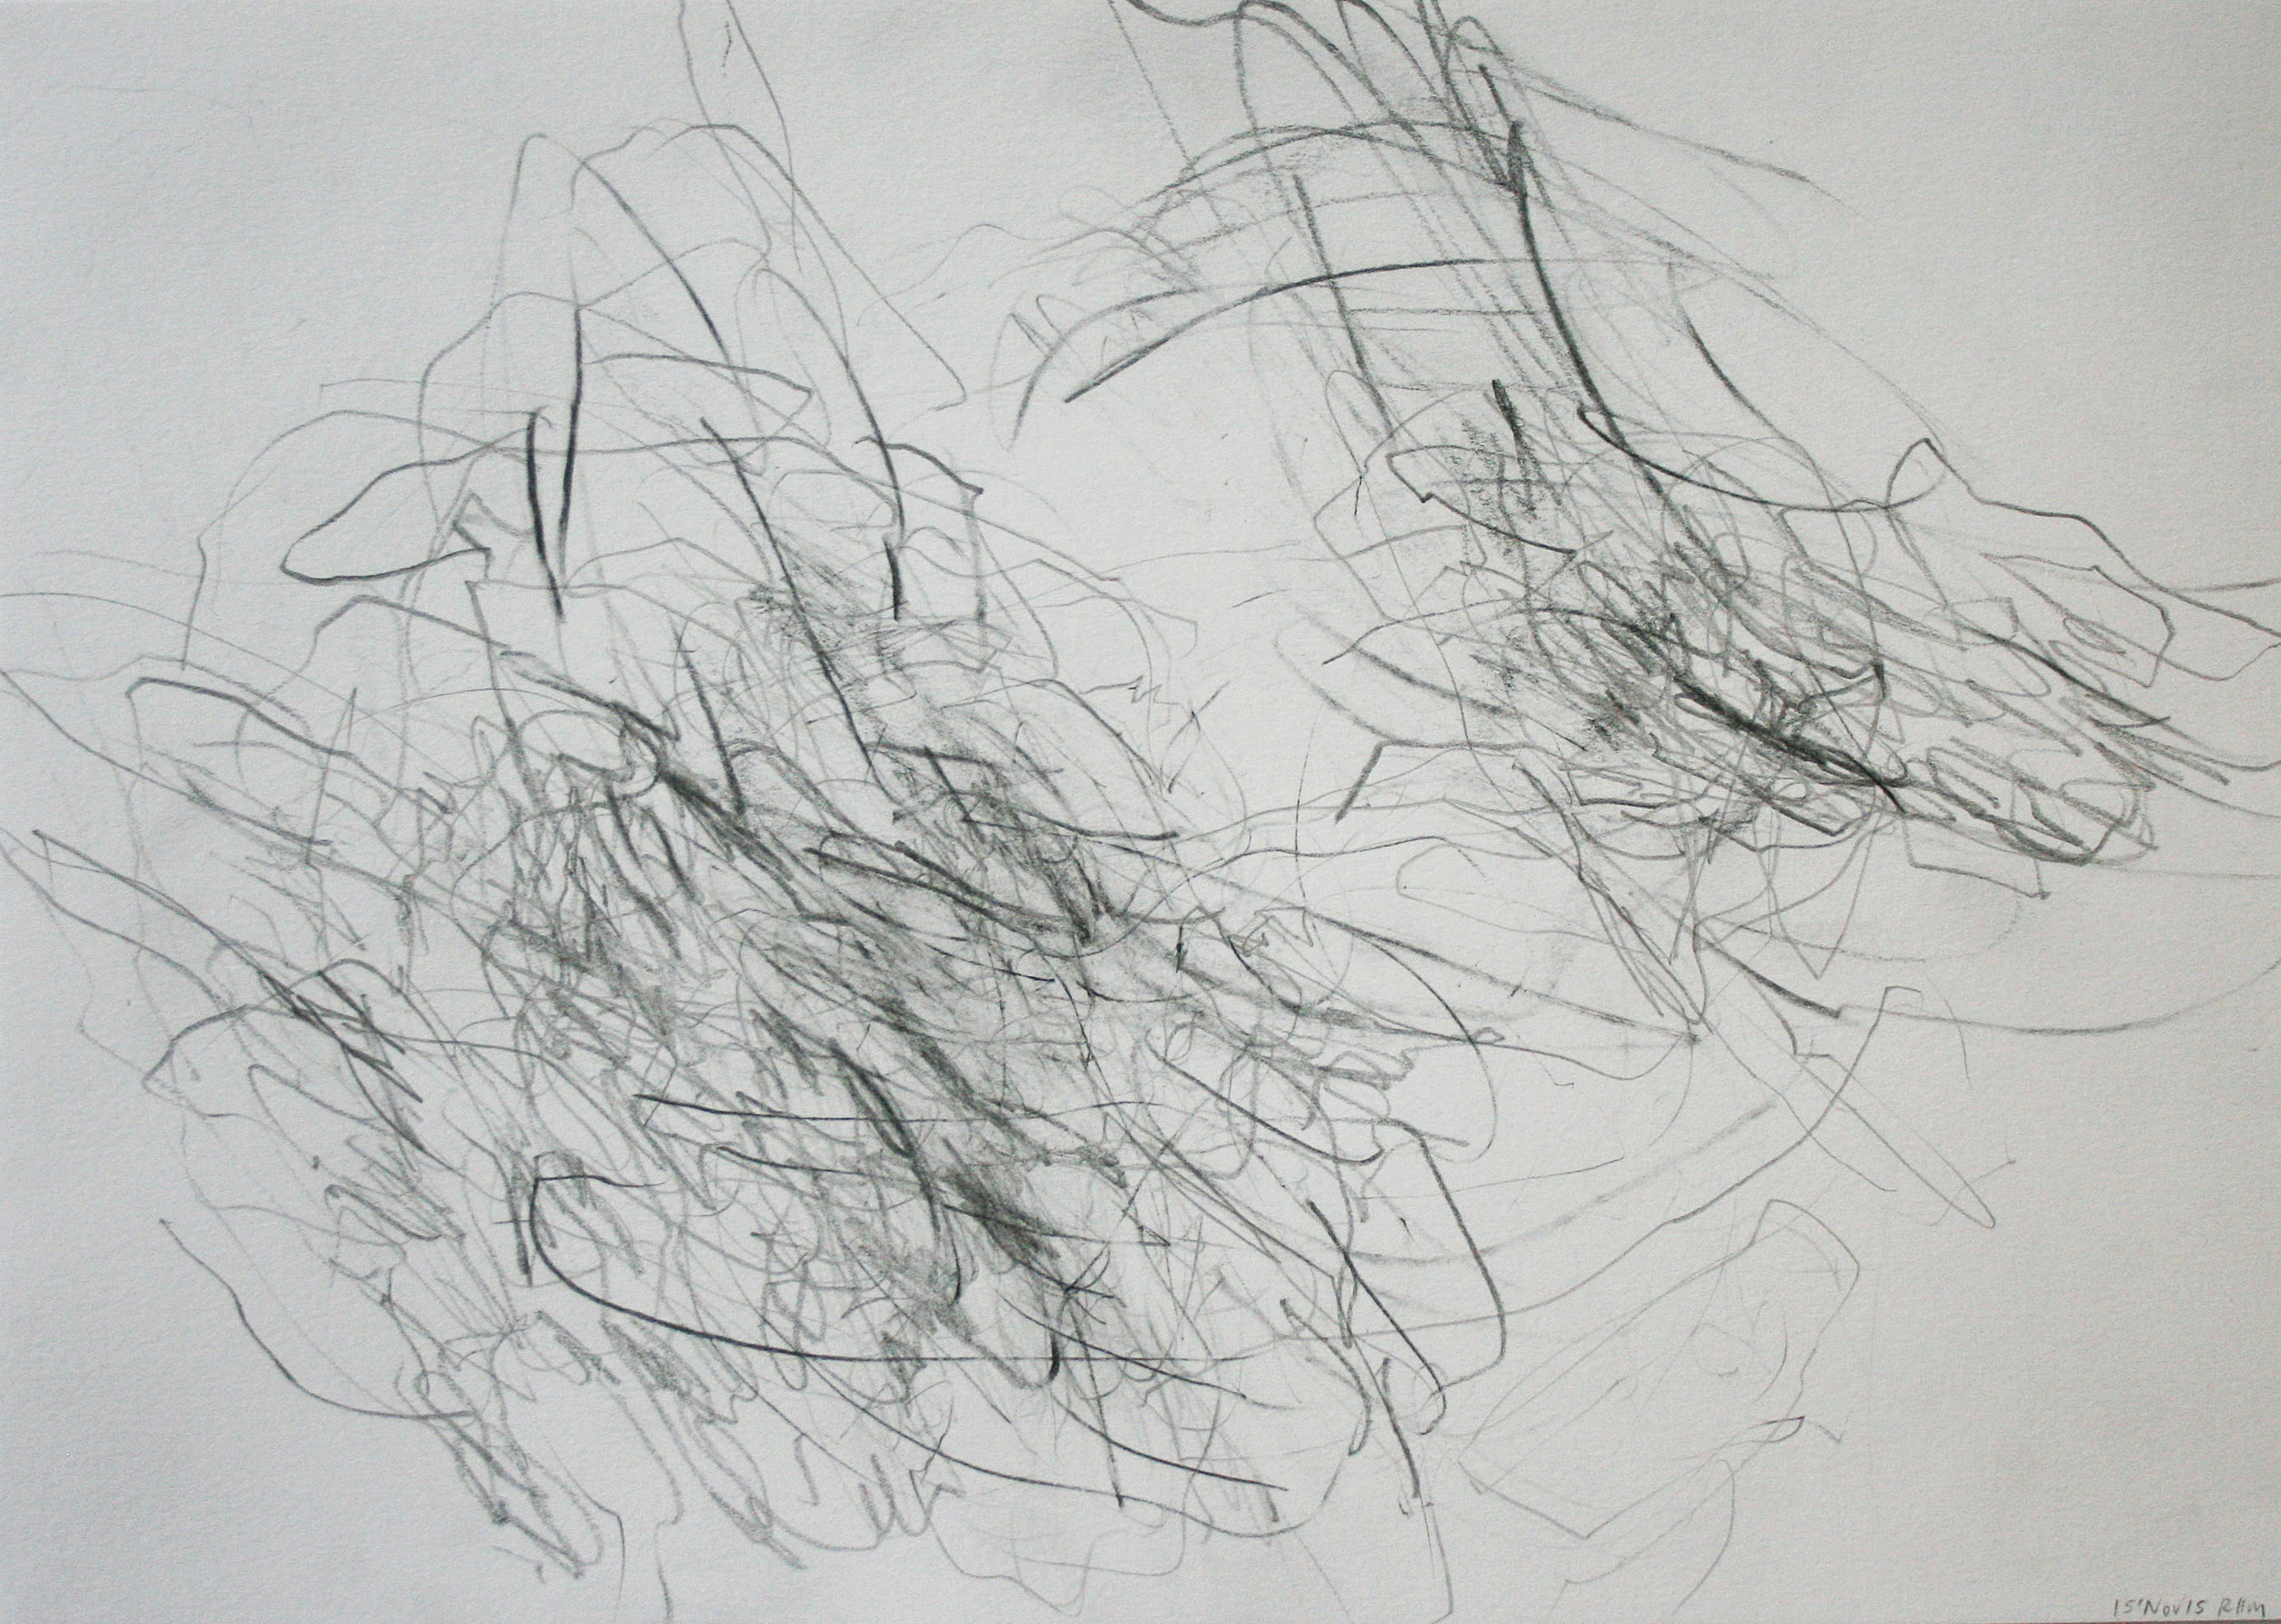  Left hand Drawing IX  November  2015  graphite on paper  21 x 30 cm 